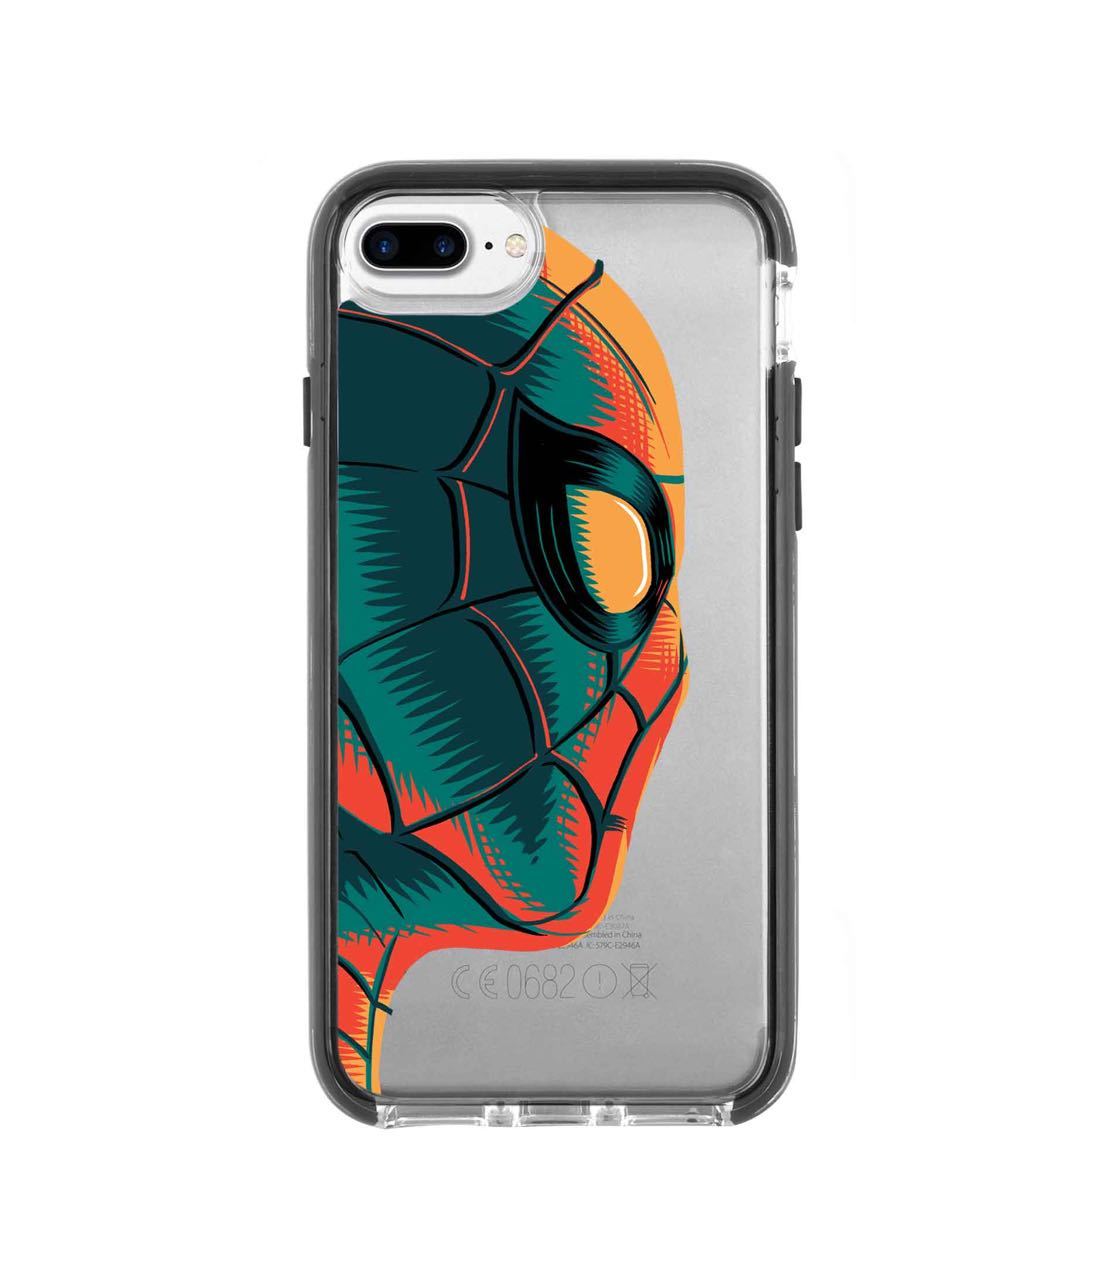 Illuminated Spiderman - Extreme Phone Case for iPhone 7 Plus